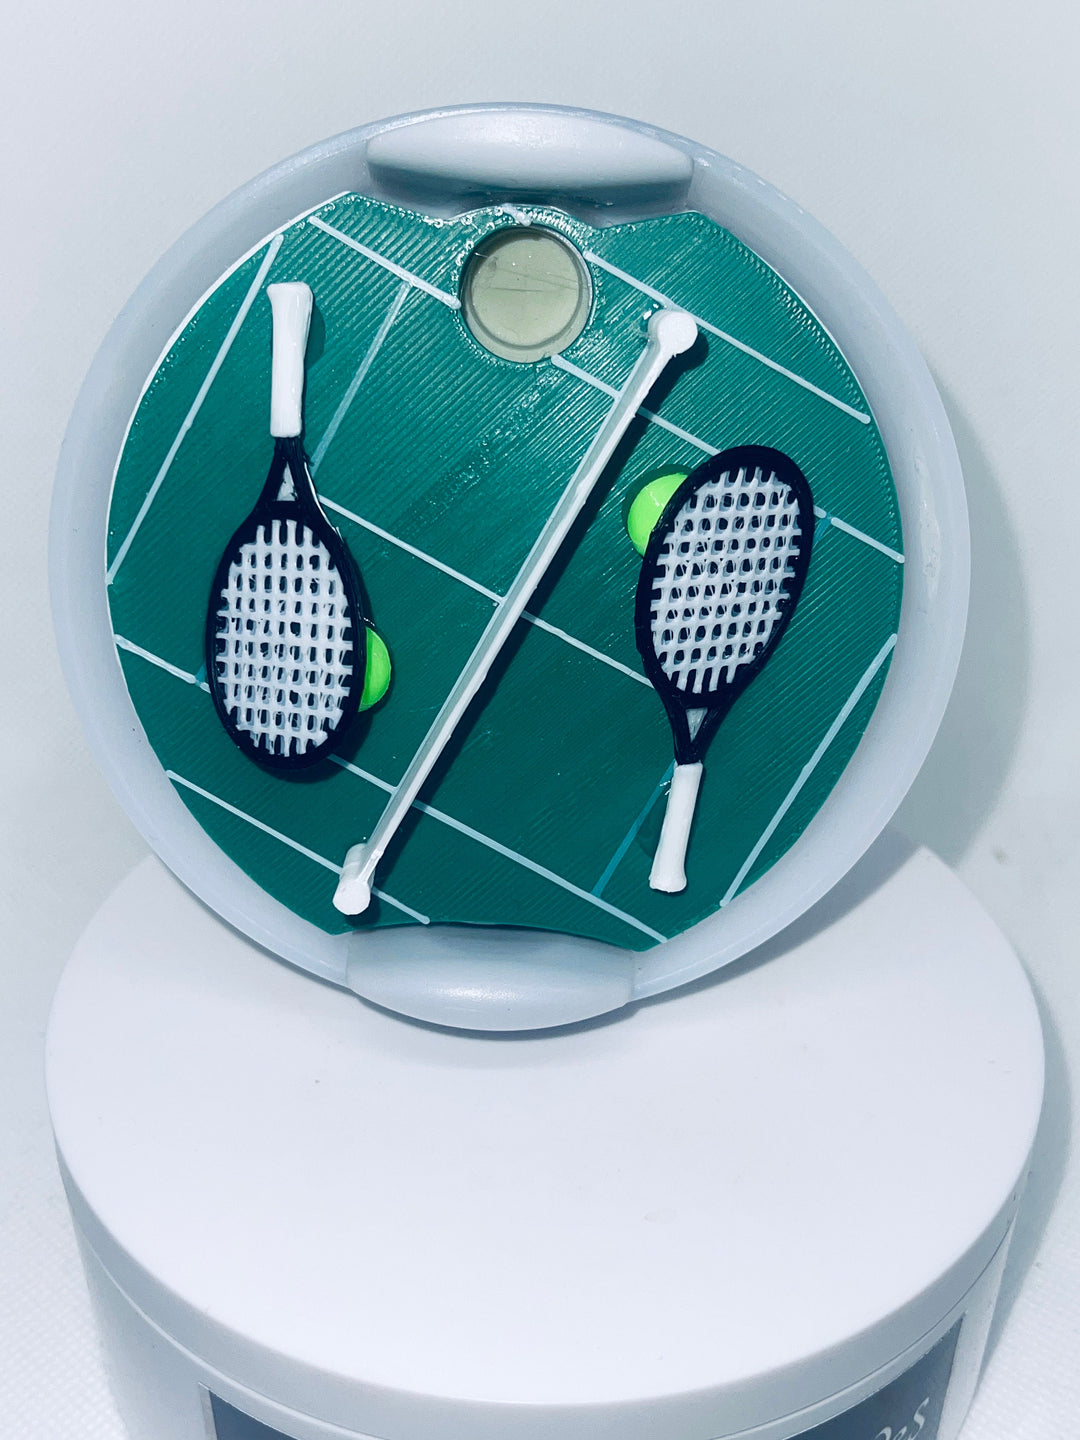 Tennis Tumbler Topper for 40 oz tumblers, 40 oz 3D Sports tumbler topper, 3D Tennis Topper, unique gift